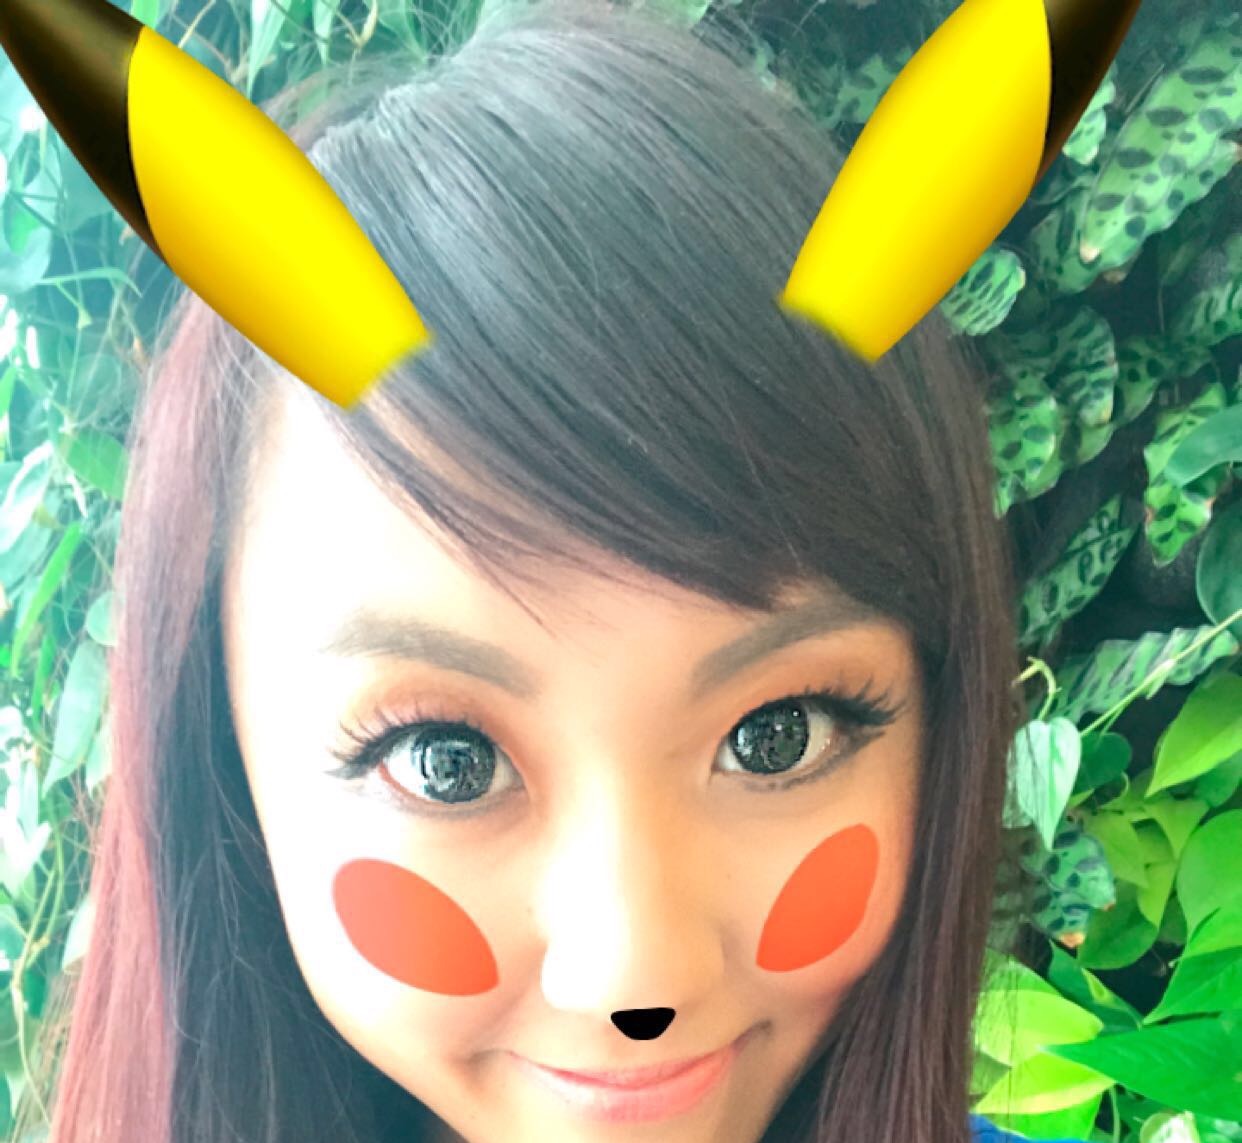 Oven teksten Beoordeling Snapchat now lets you Pikachu yourself | TechCrunch